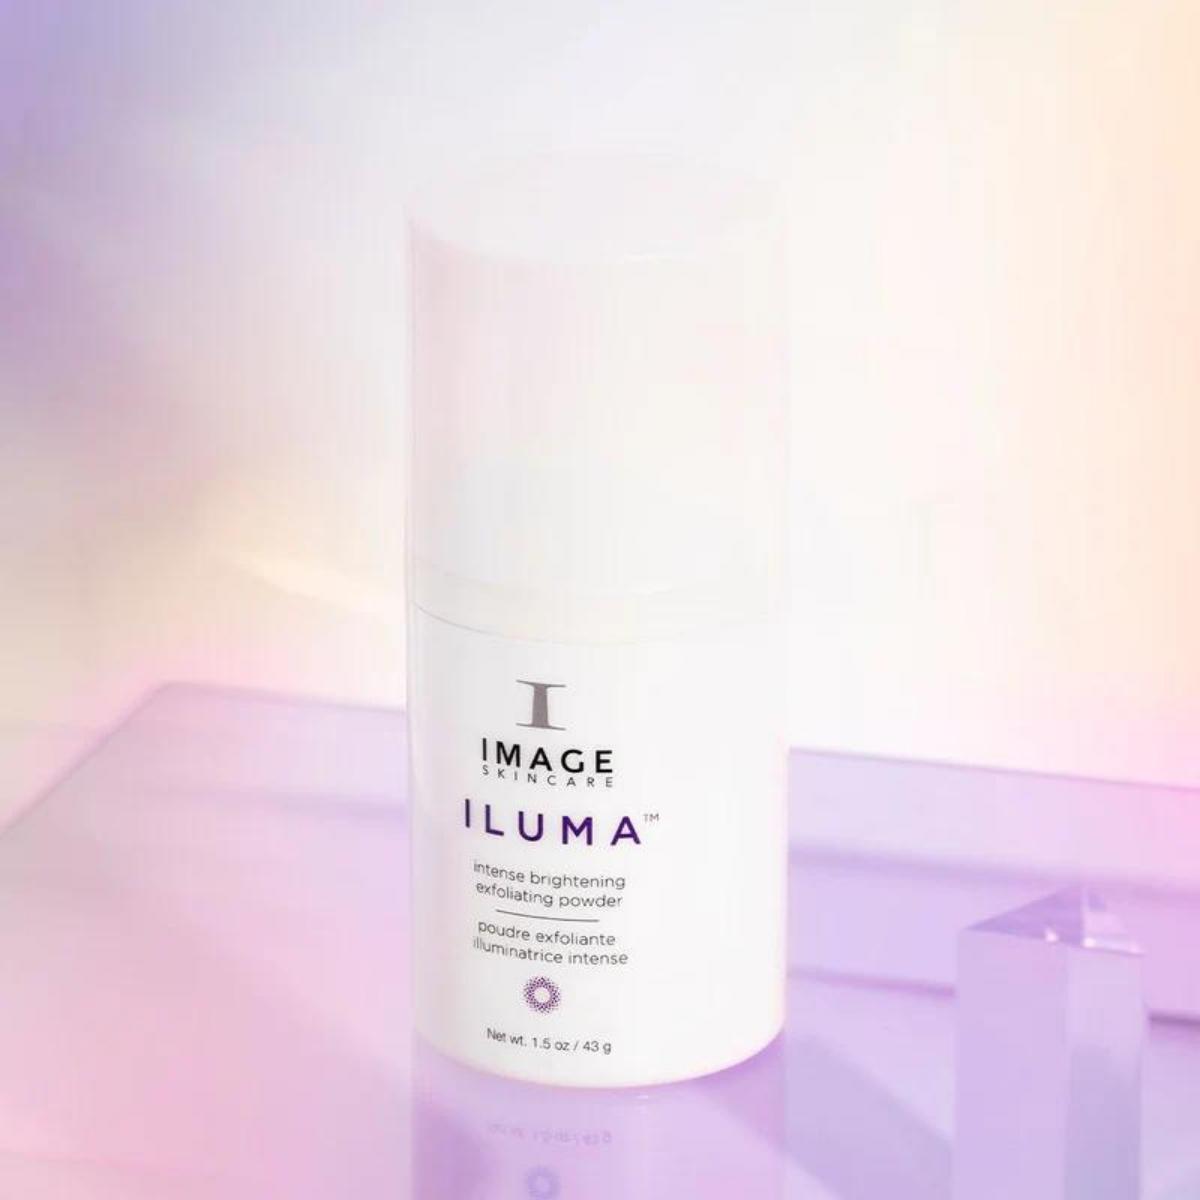 IMAGE Skincare Iluma Intense Brightening Exfoliating Powder product shot 